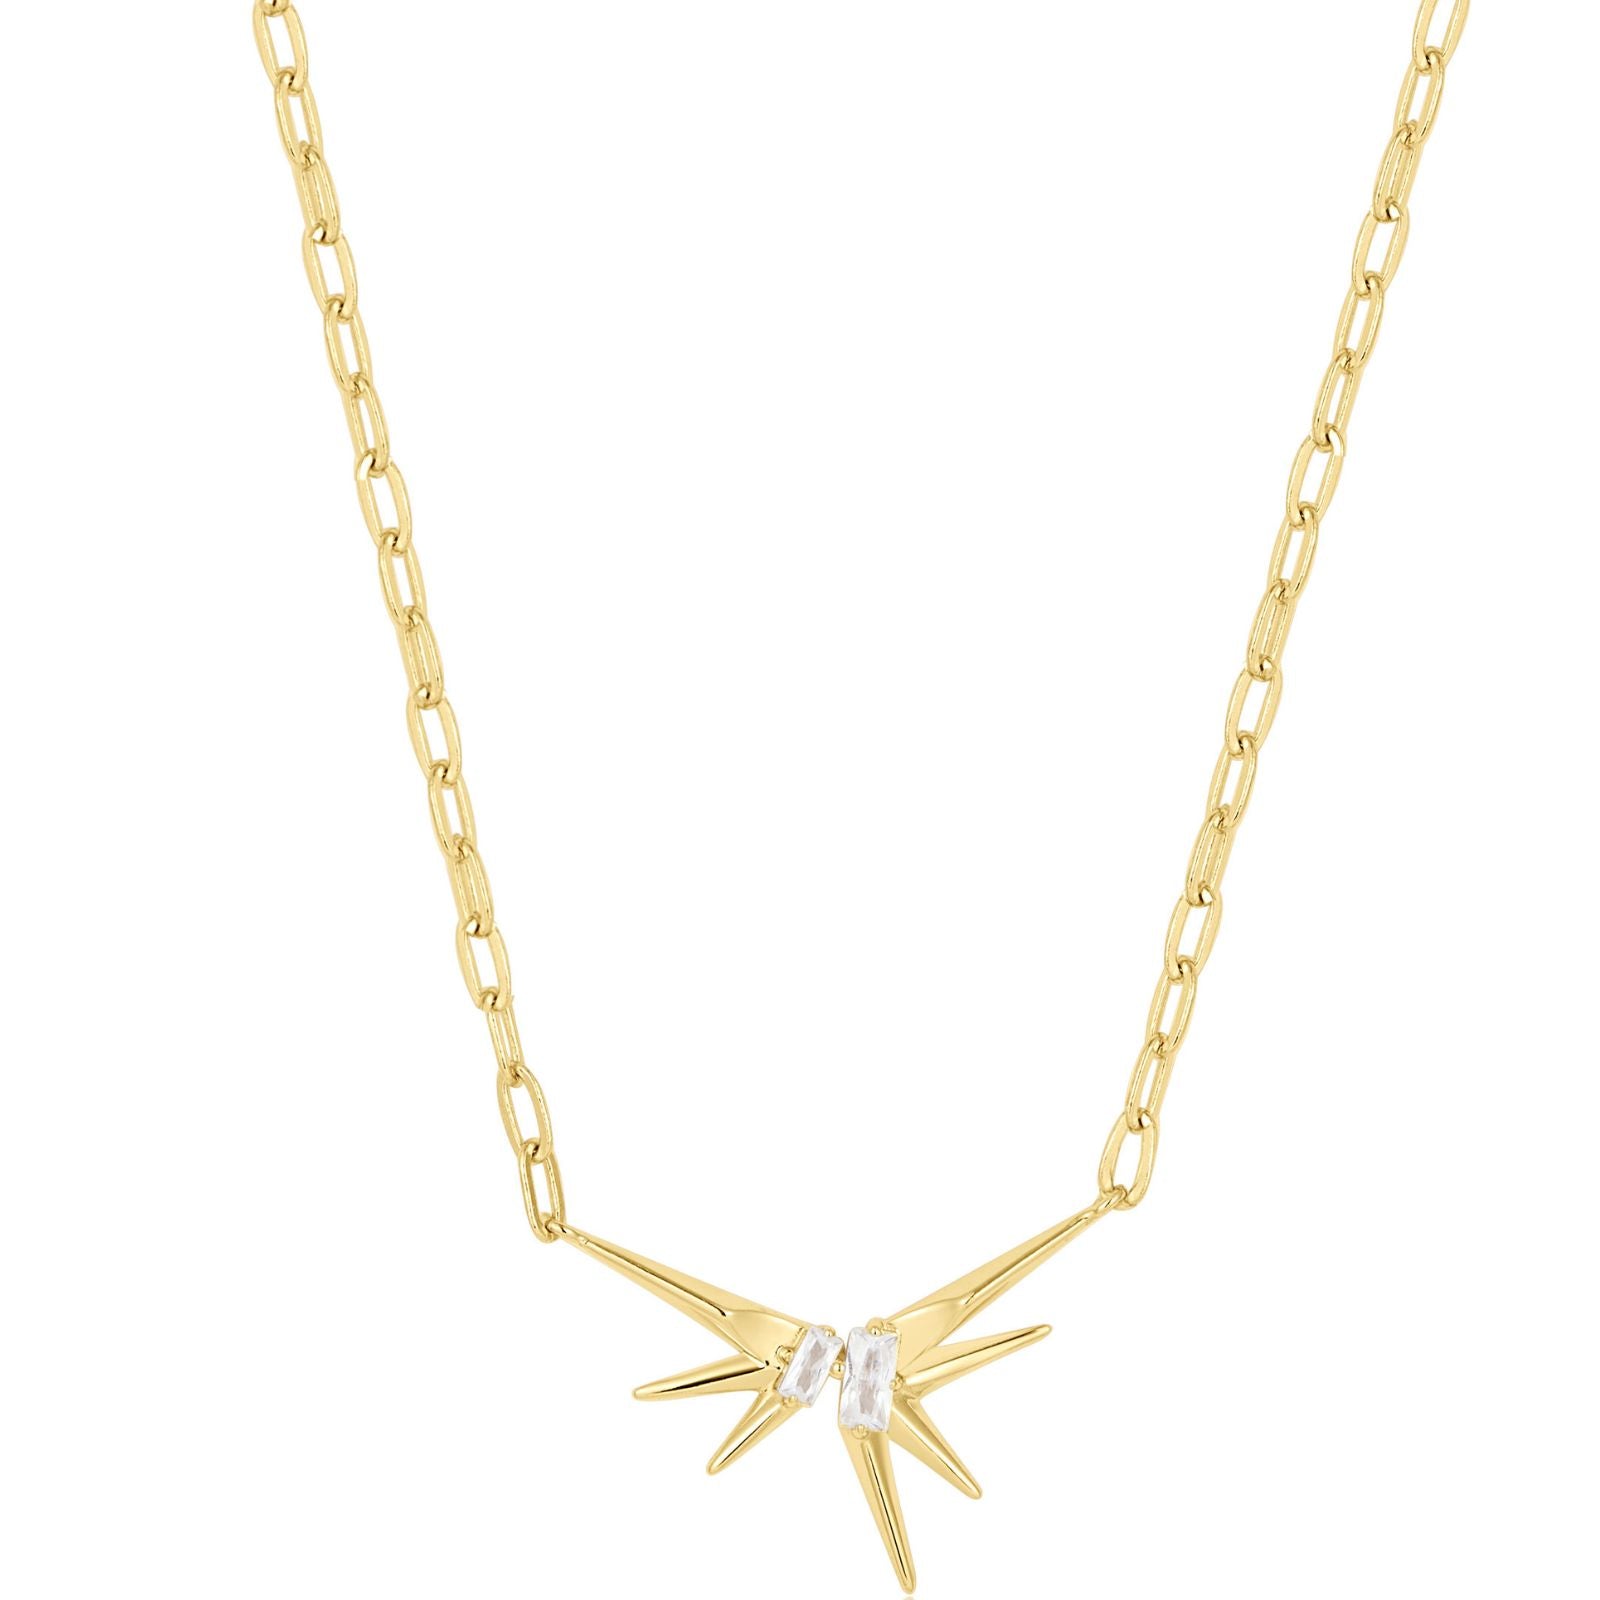 Kiola Designs Golden Spike Necklace | Amazon.com